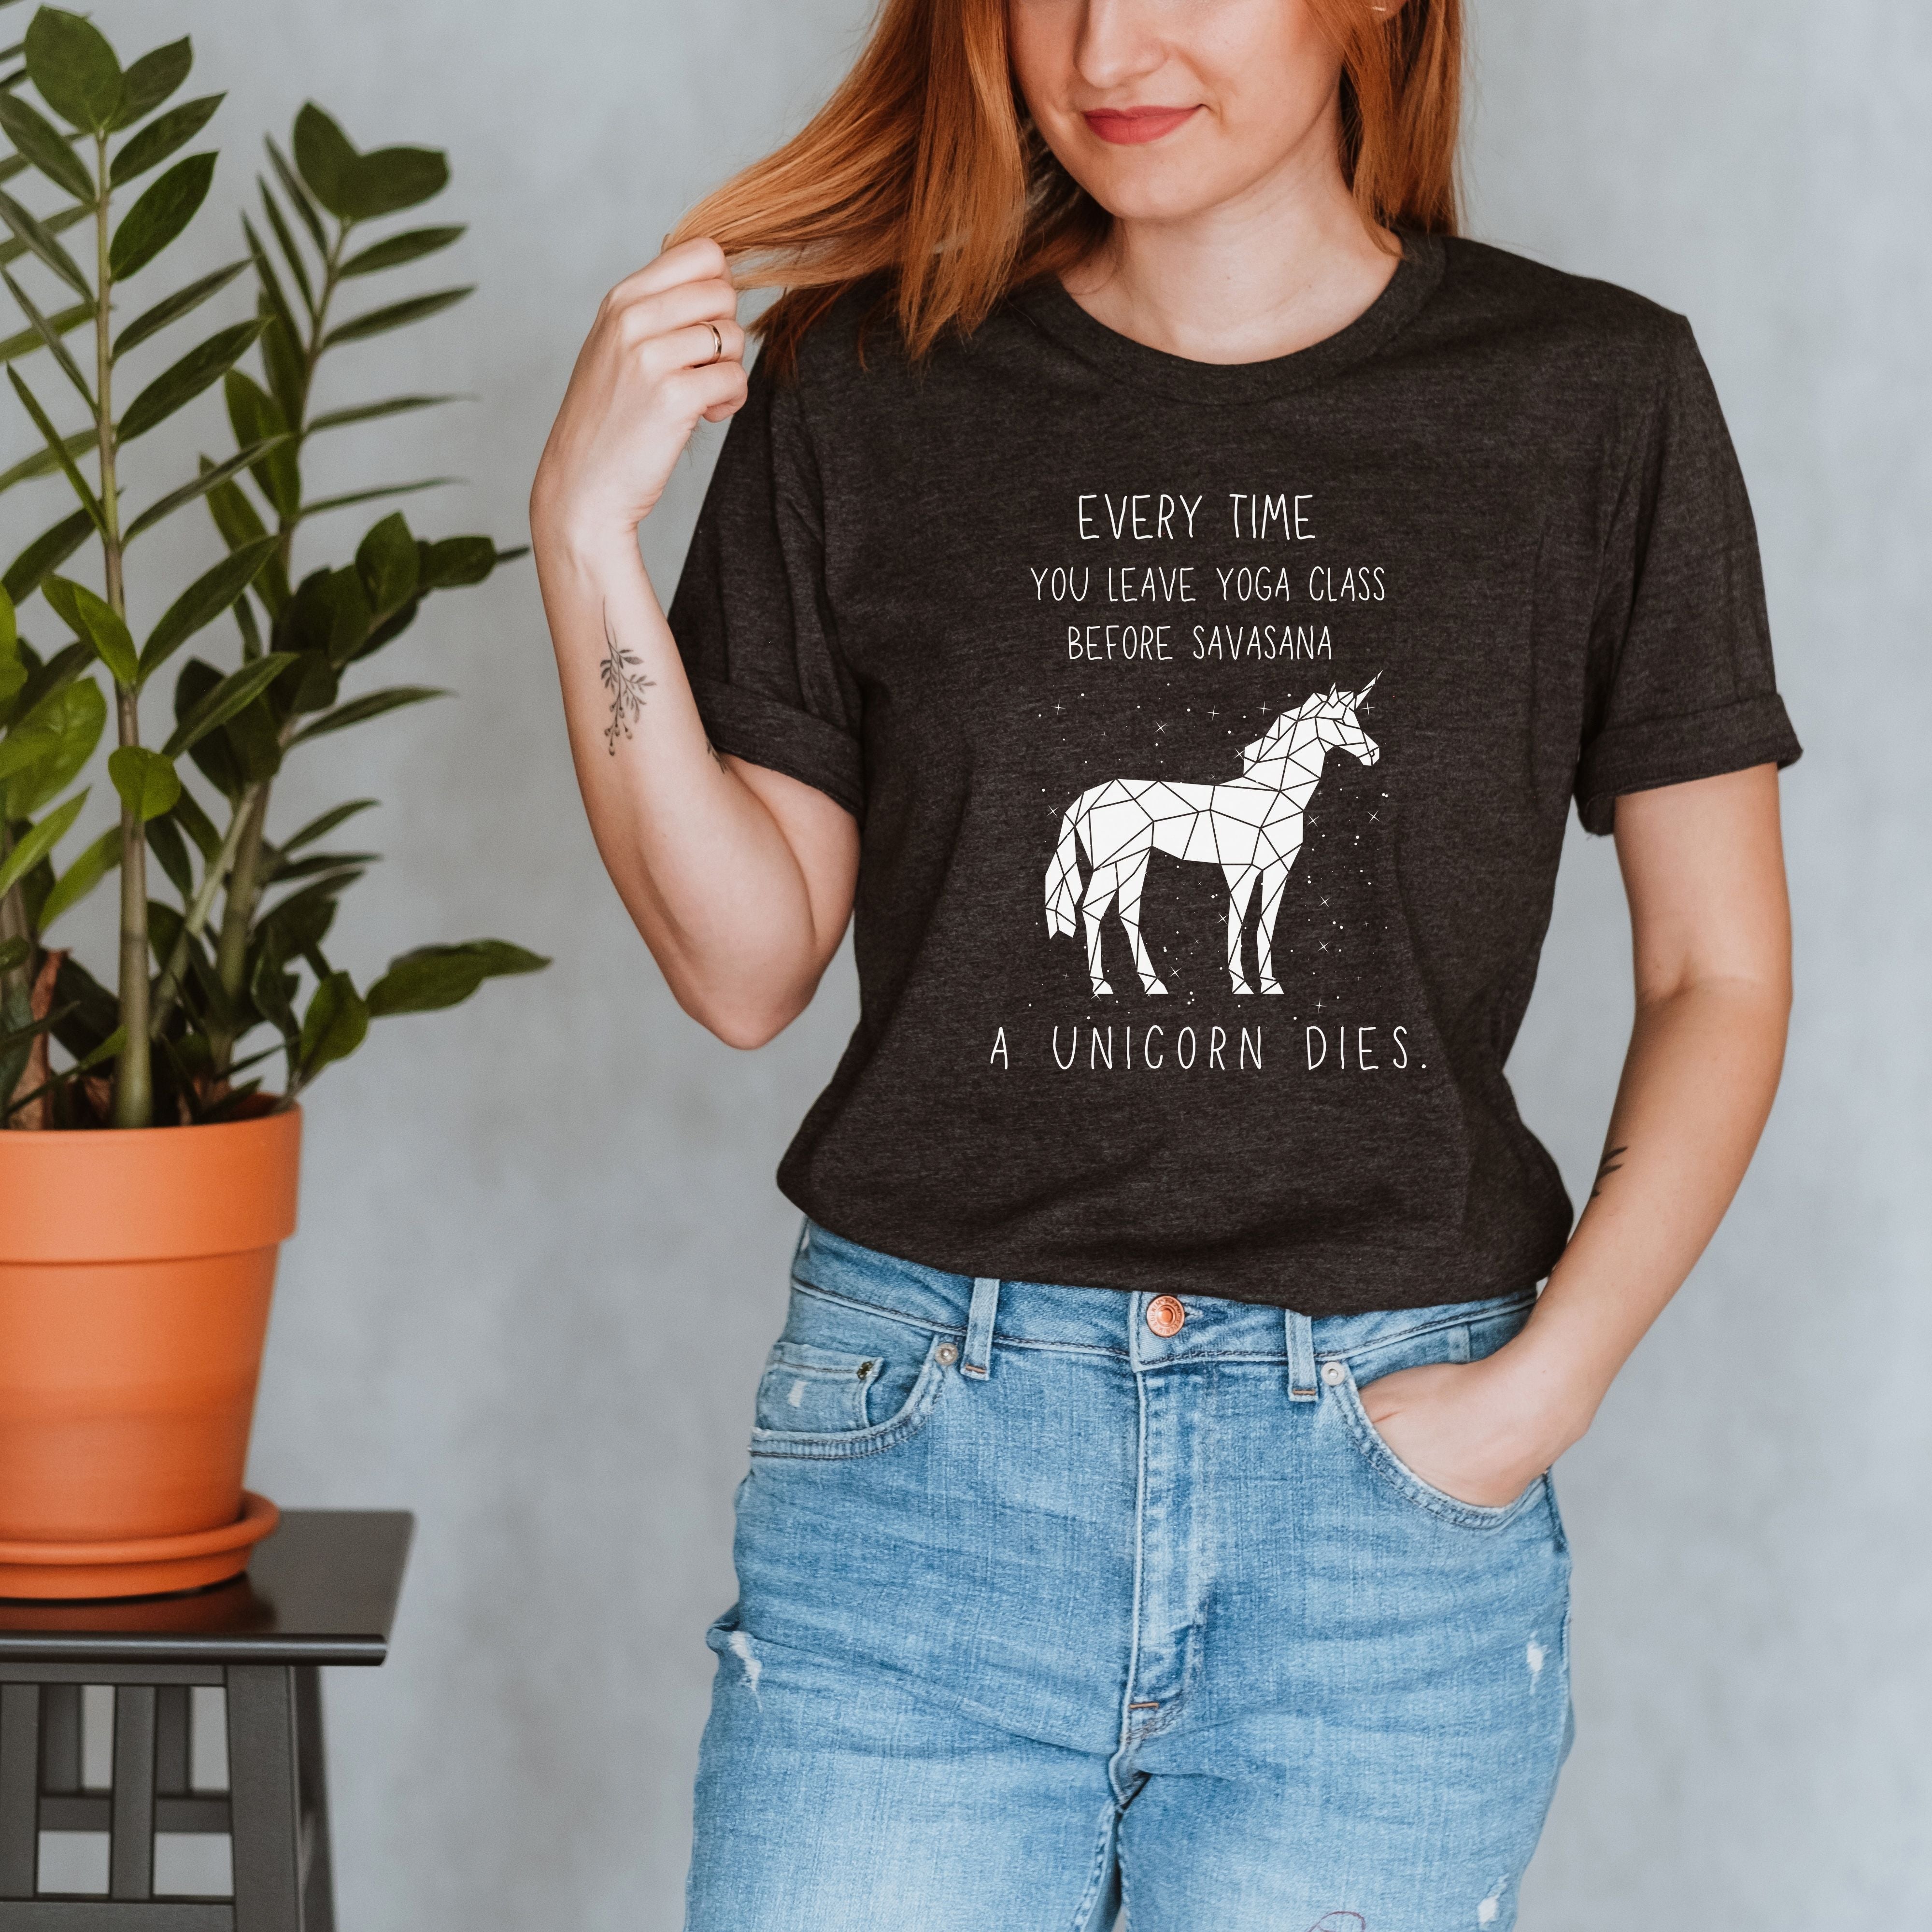 You Leave Yoga Class Unicorn T-Shirt